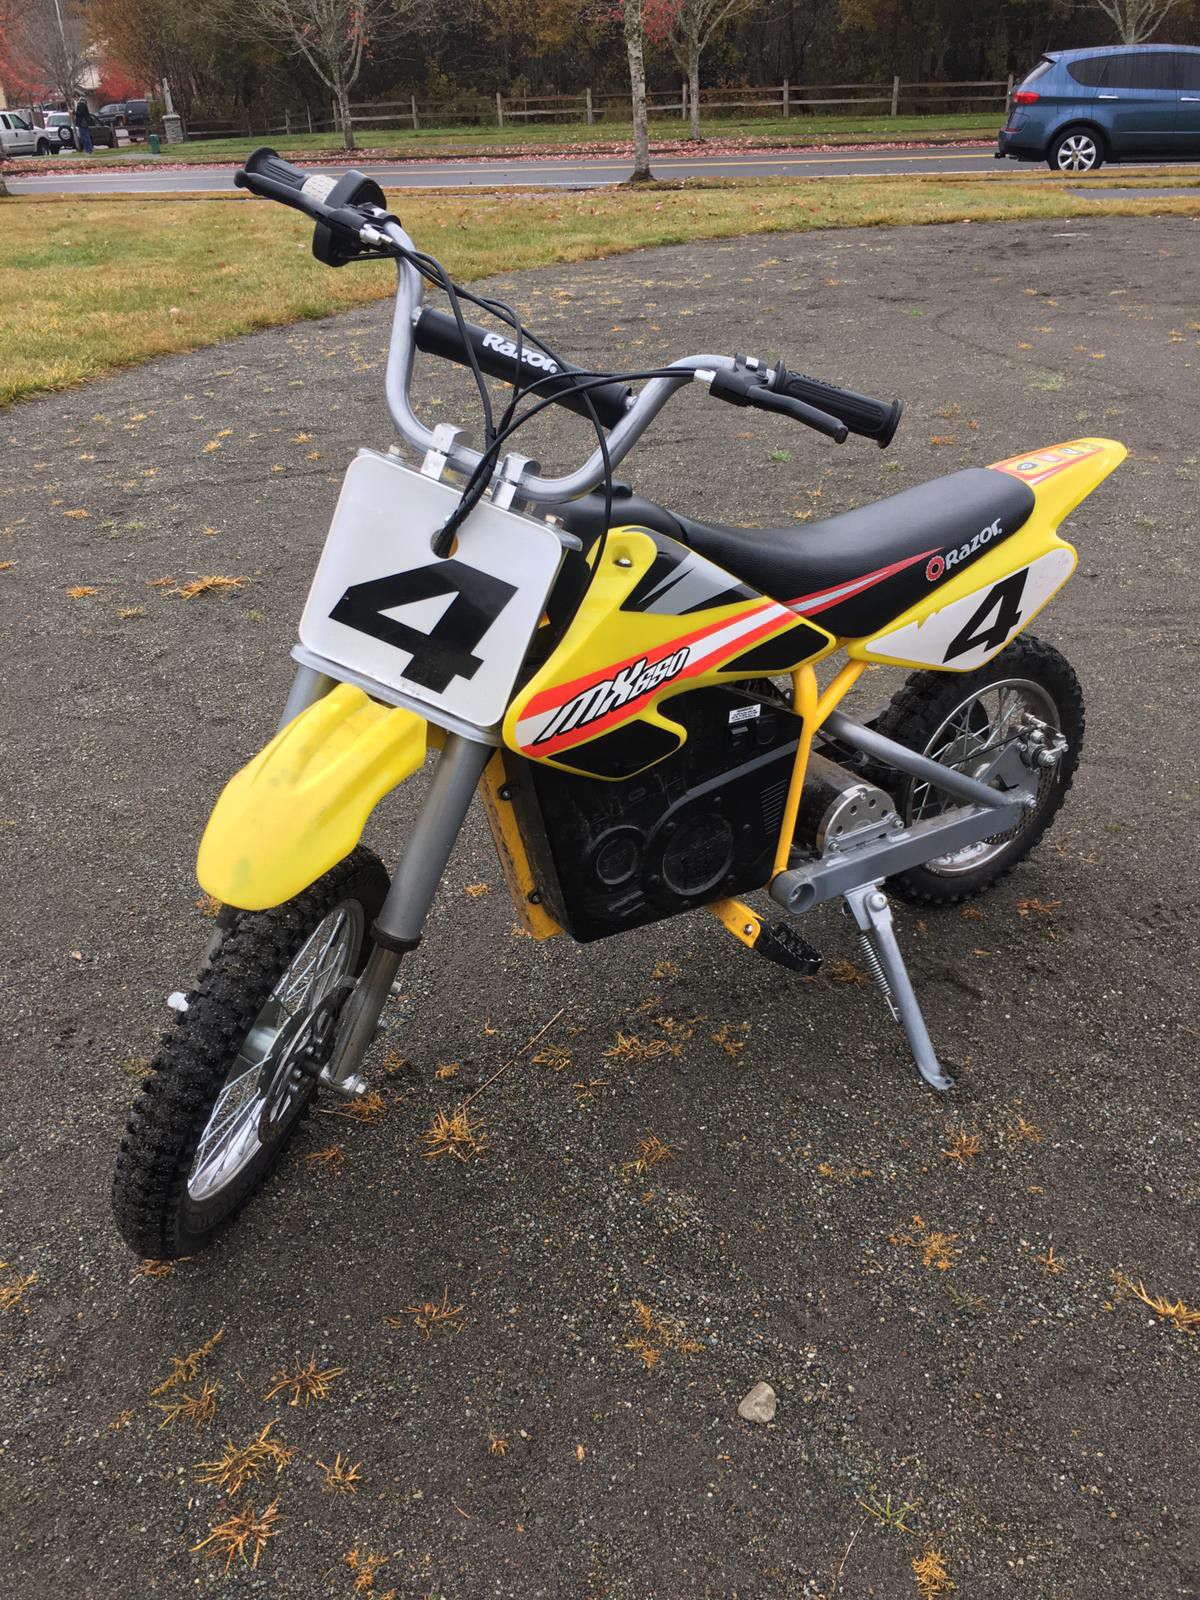 Razor electric dirt bike for $390